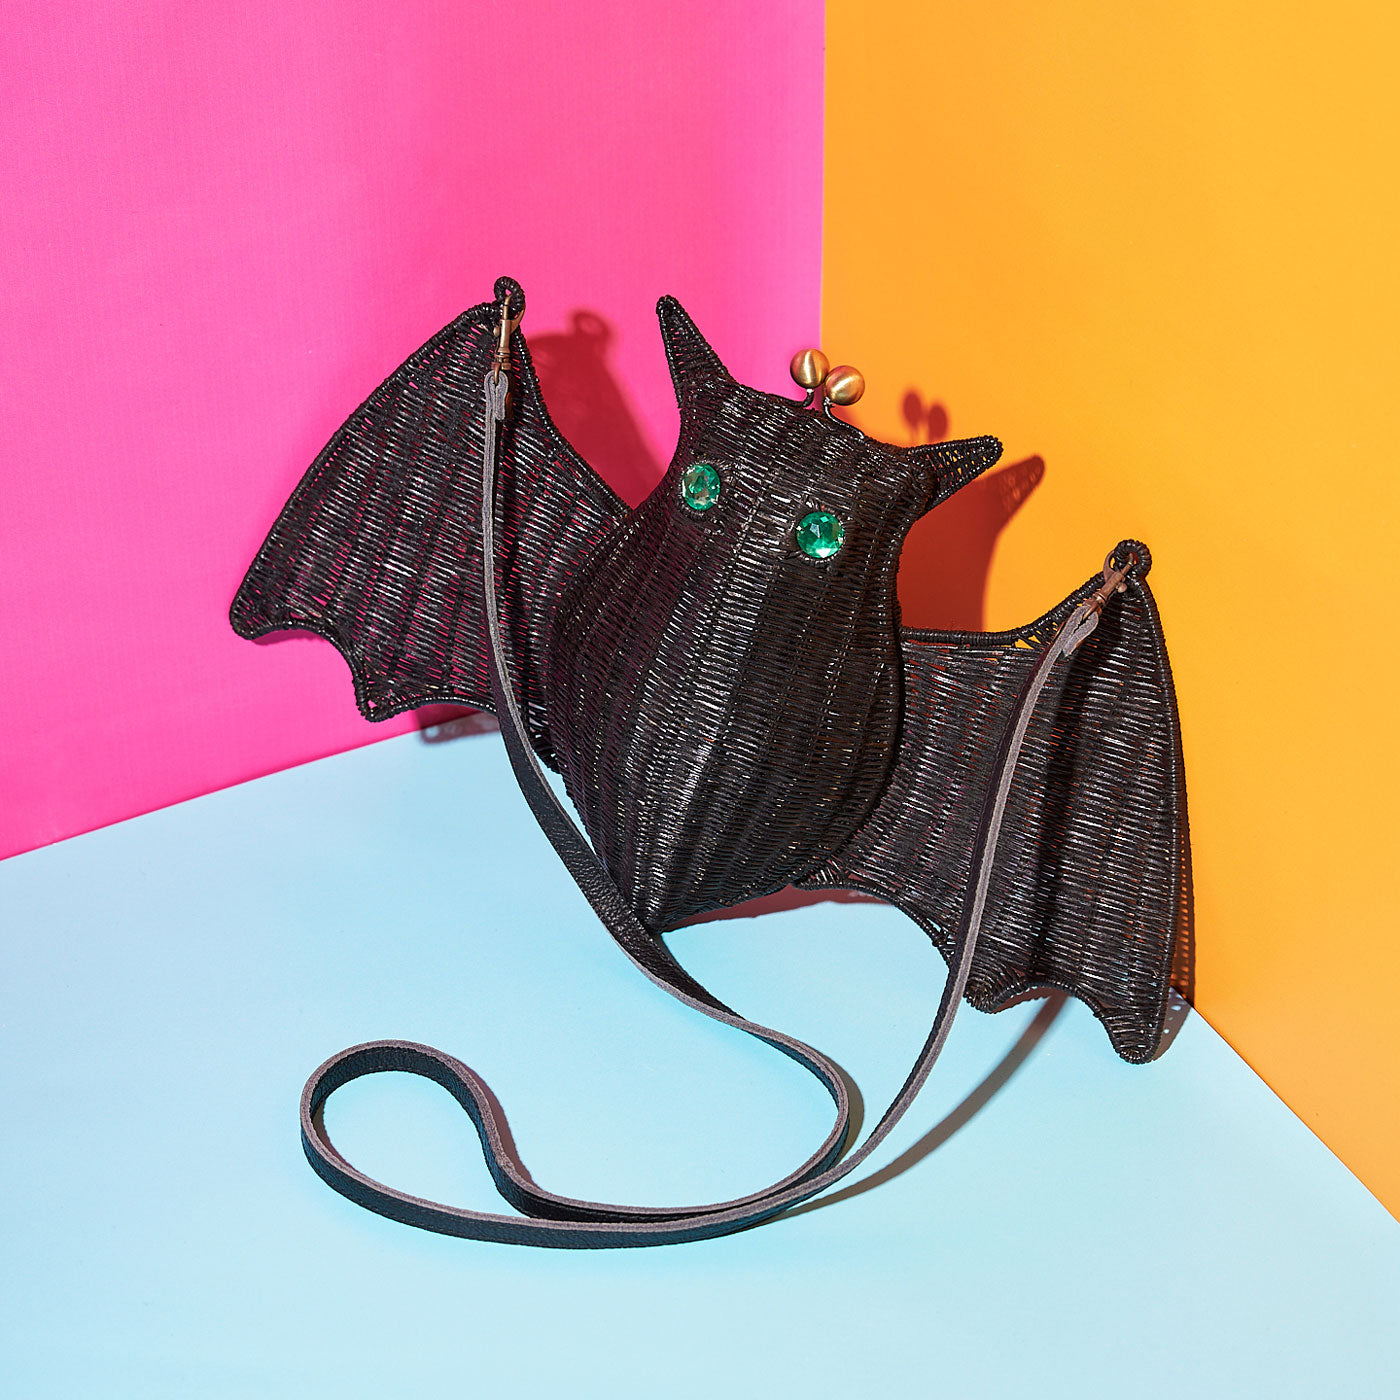 Wicker Darling's Batholomew the green-eyed bat purse on a colourful background